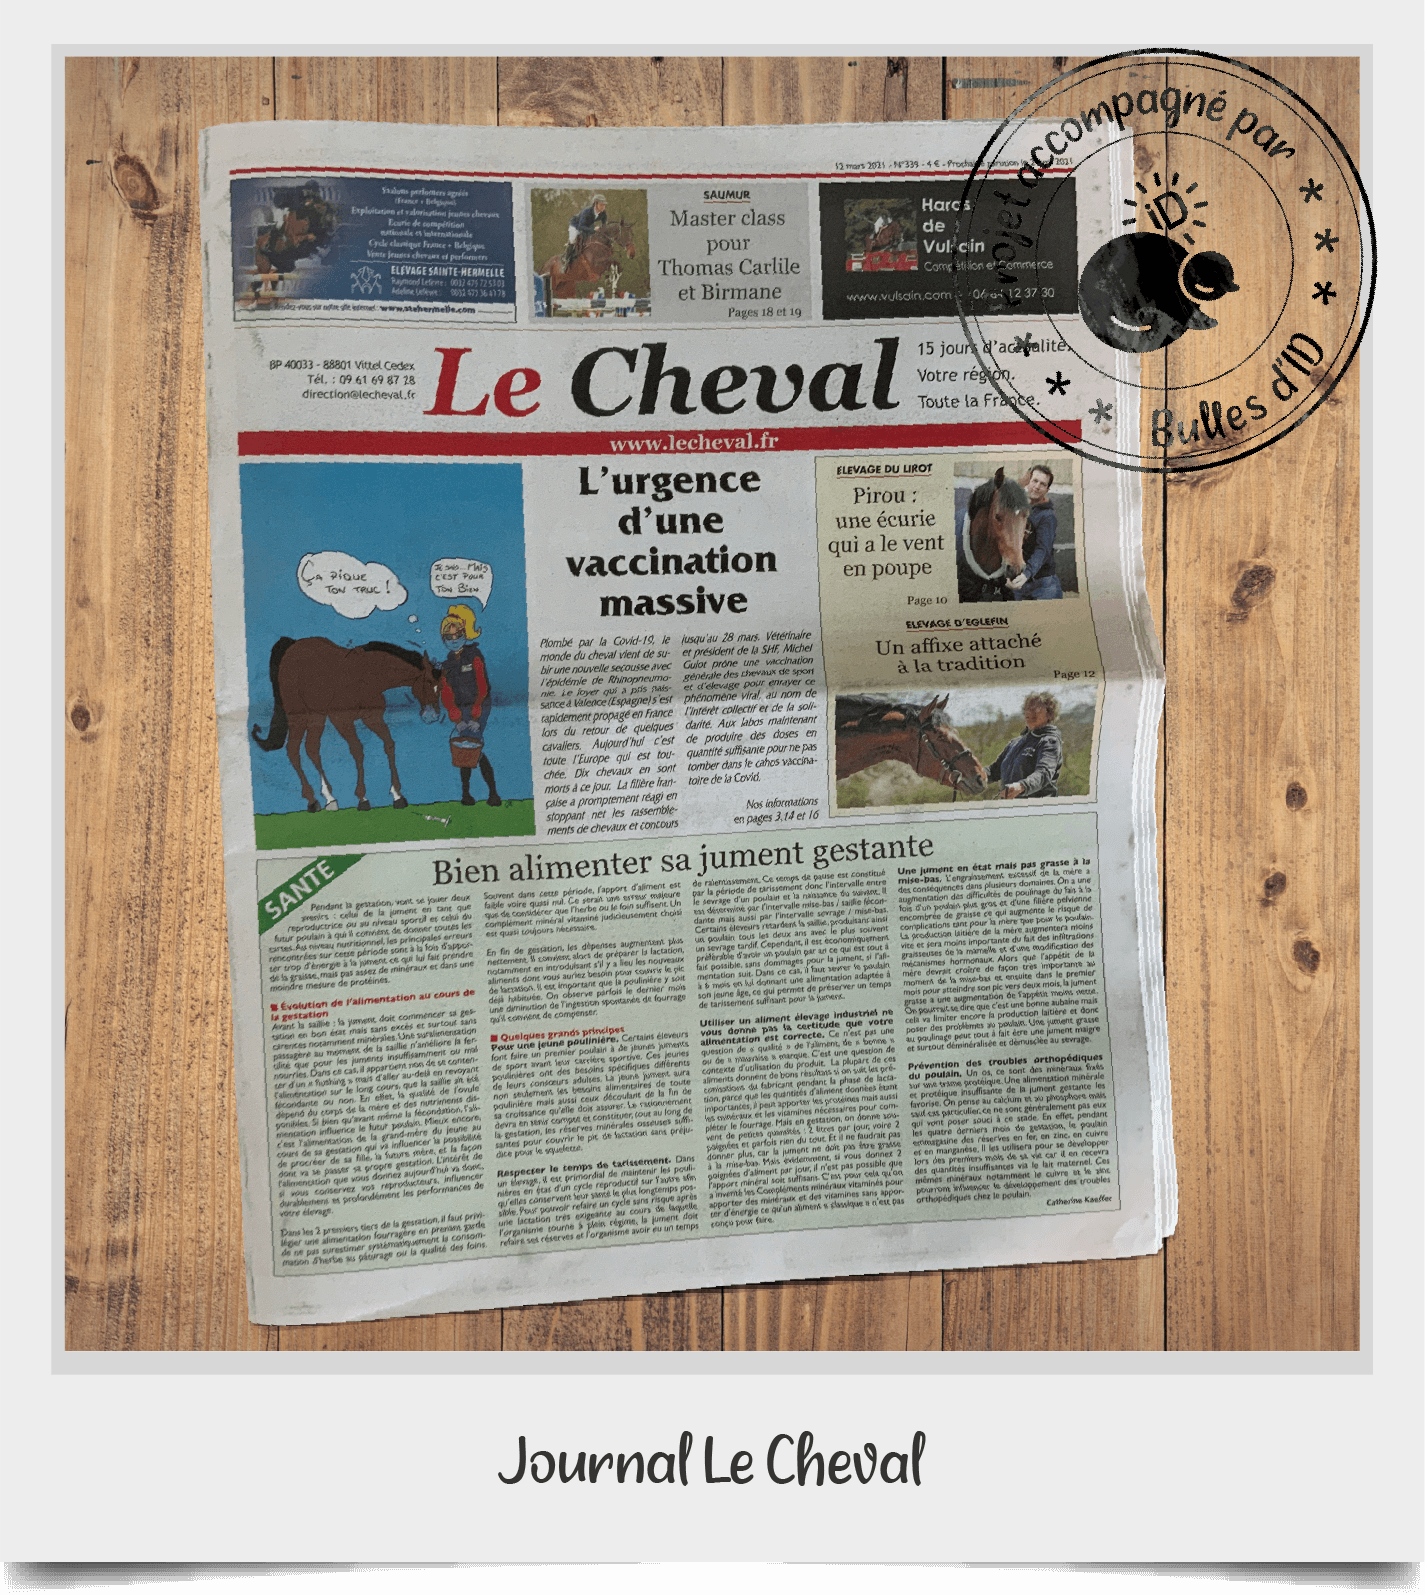 Polaroid Journal Le Cheval illustration vaccination HVE